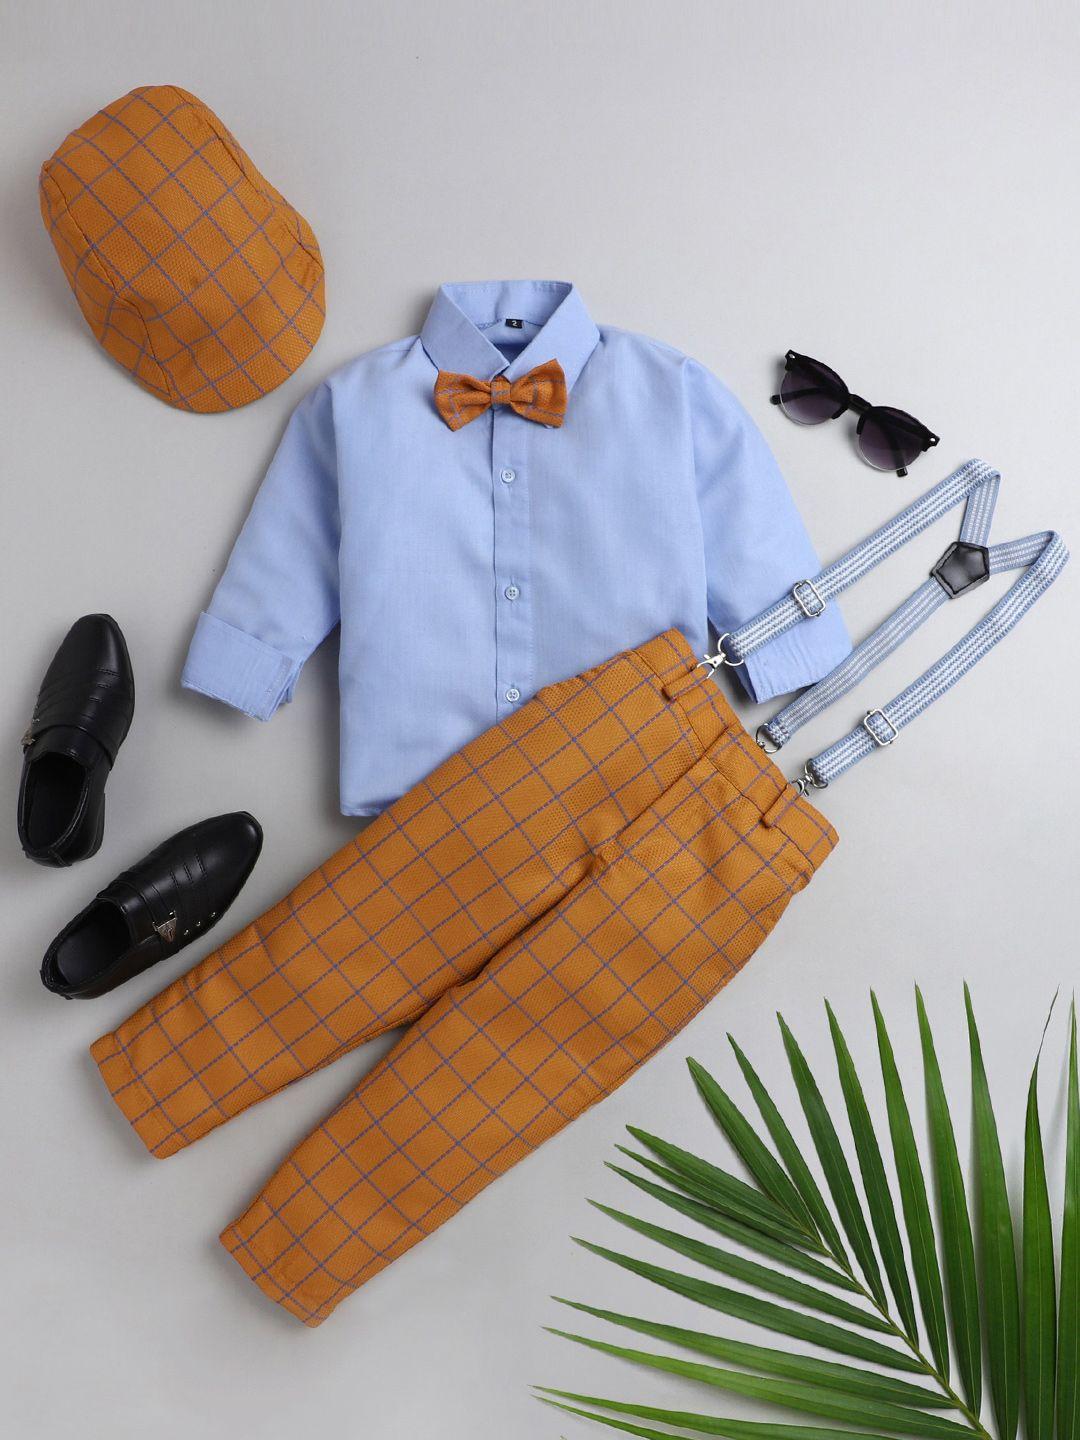 jeetethnics boys orange & blue shirt & trouser with suspenders